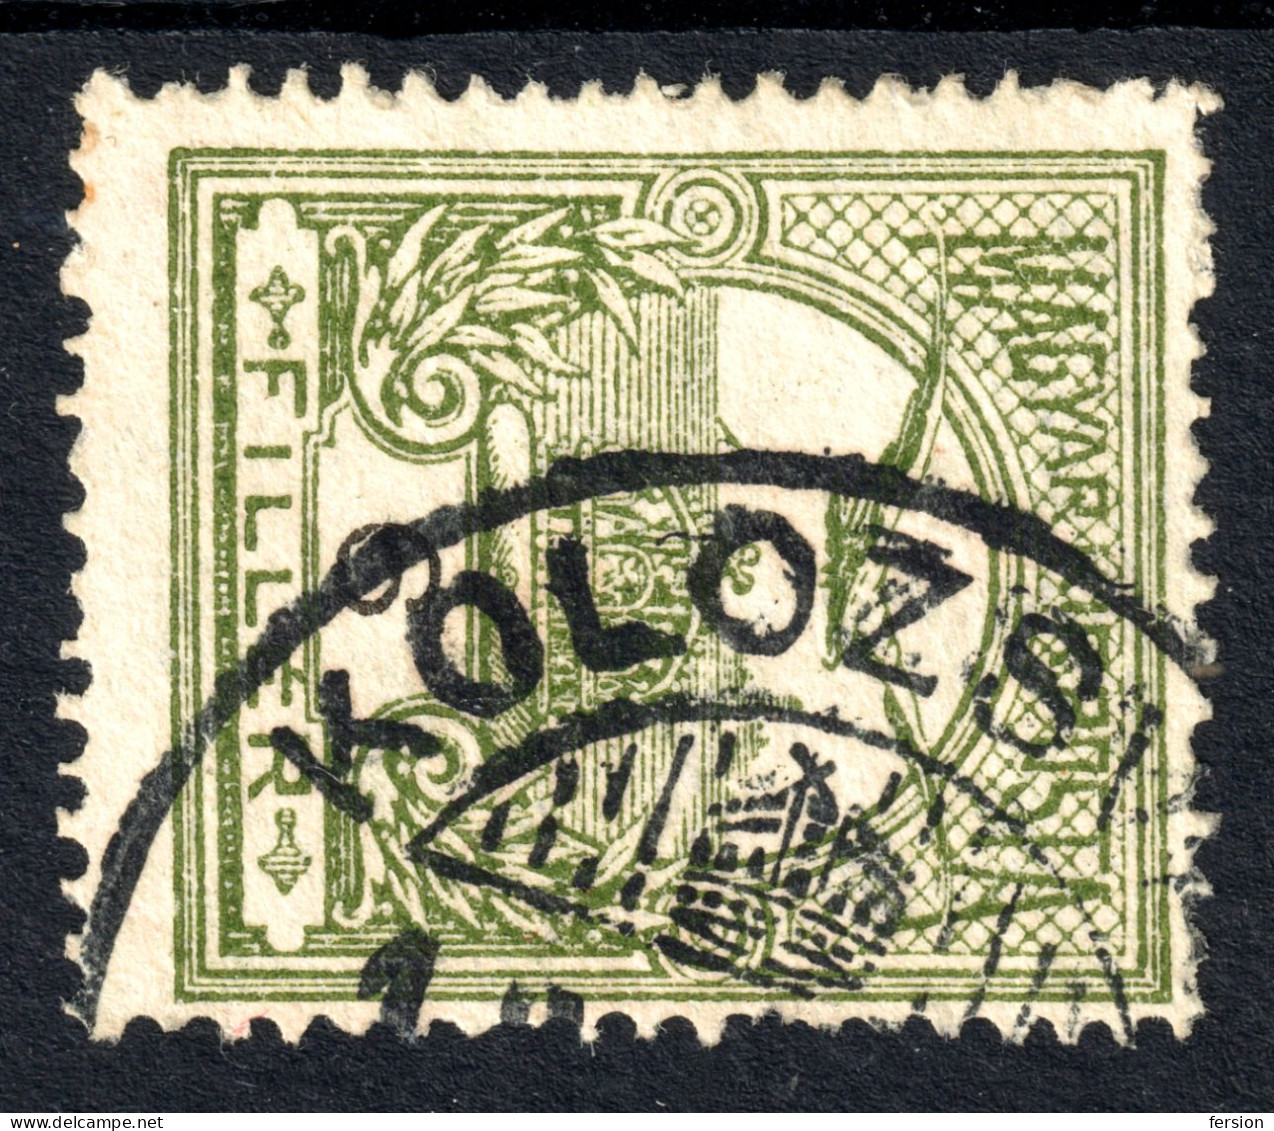 KOLOZSVÁR CLUJ-NAPOCA Postmark / TURUL Crown 1910's Hungary Romania Banat Transylvania KOLOZS County KuK K.u.K - 6 Fill - Transilvania